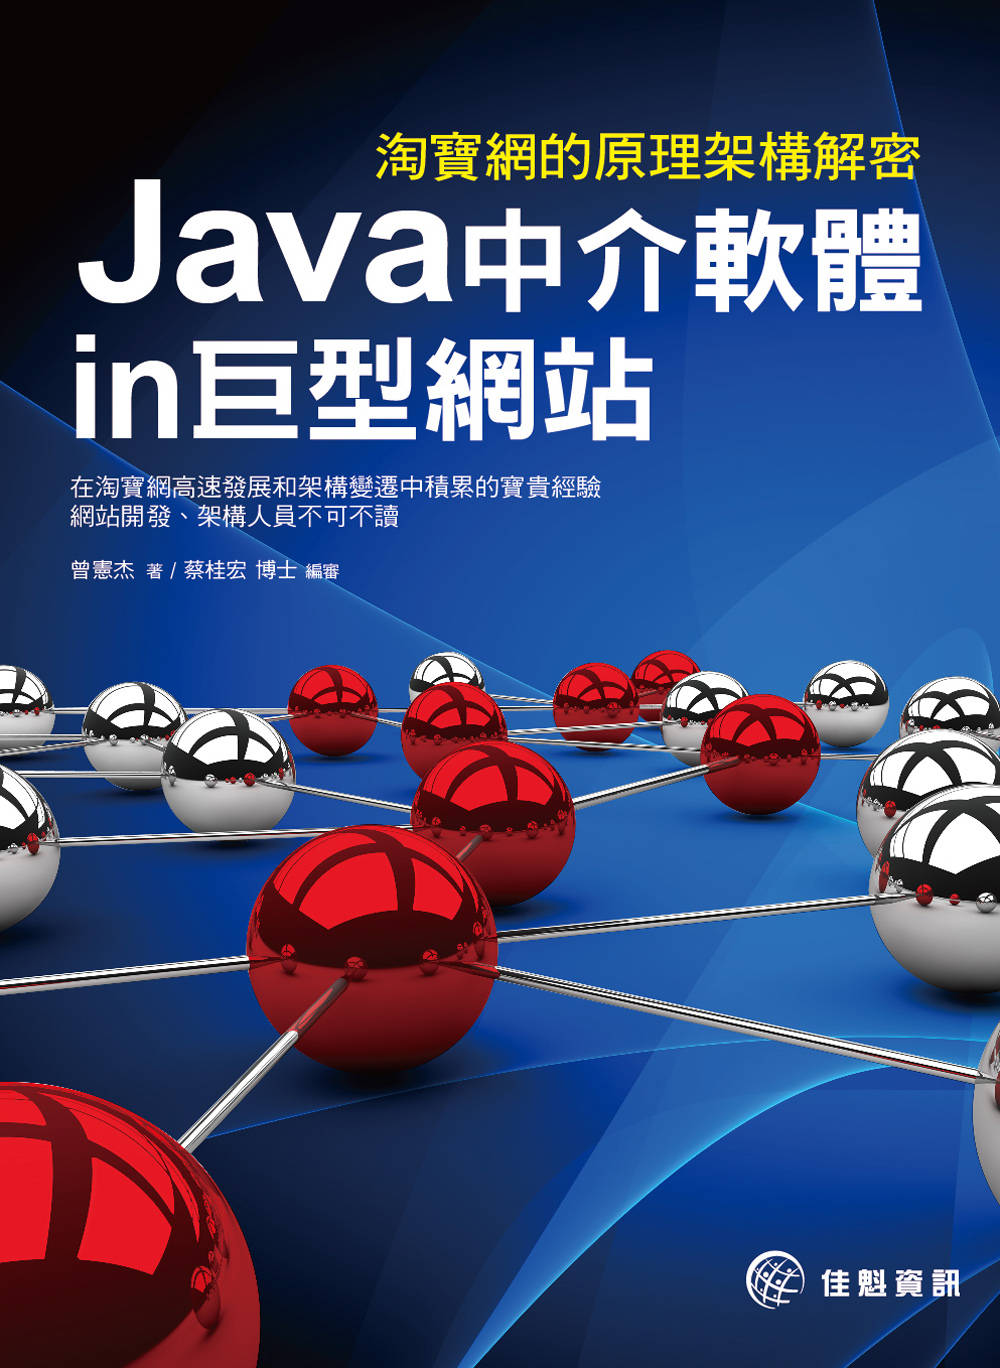 ►GO►最新優惠► 【書籍】淘寶網的原理架構解密：Java中介軟體in巨型網站